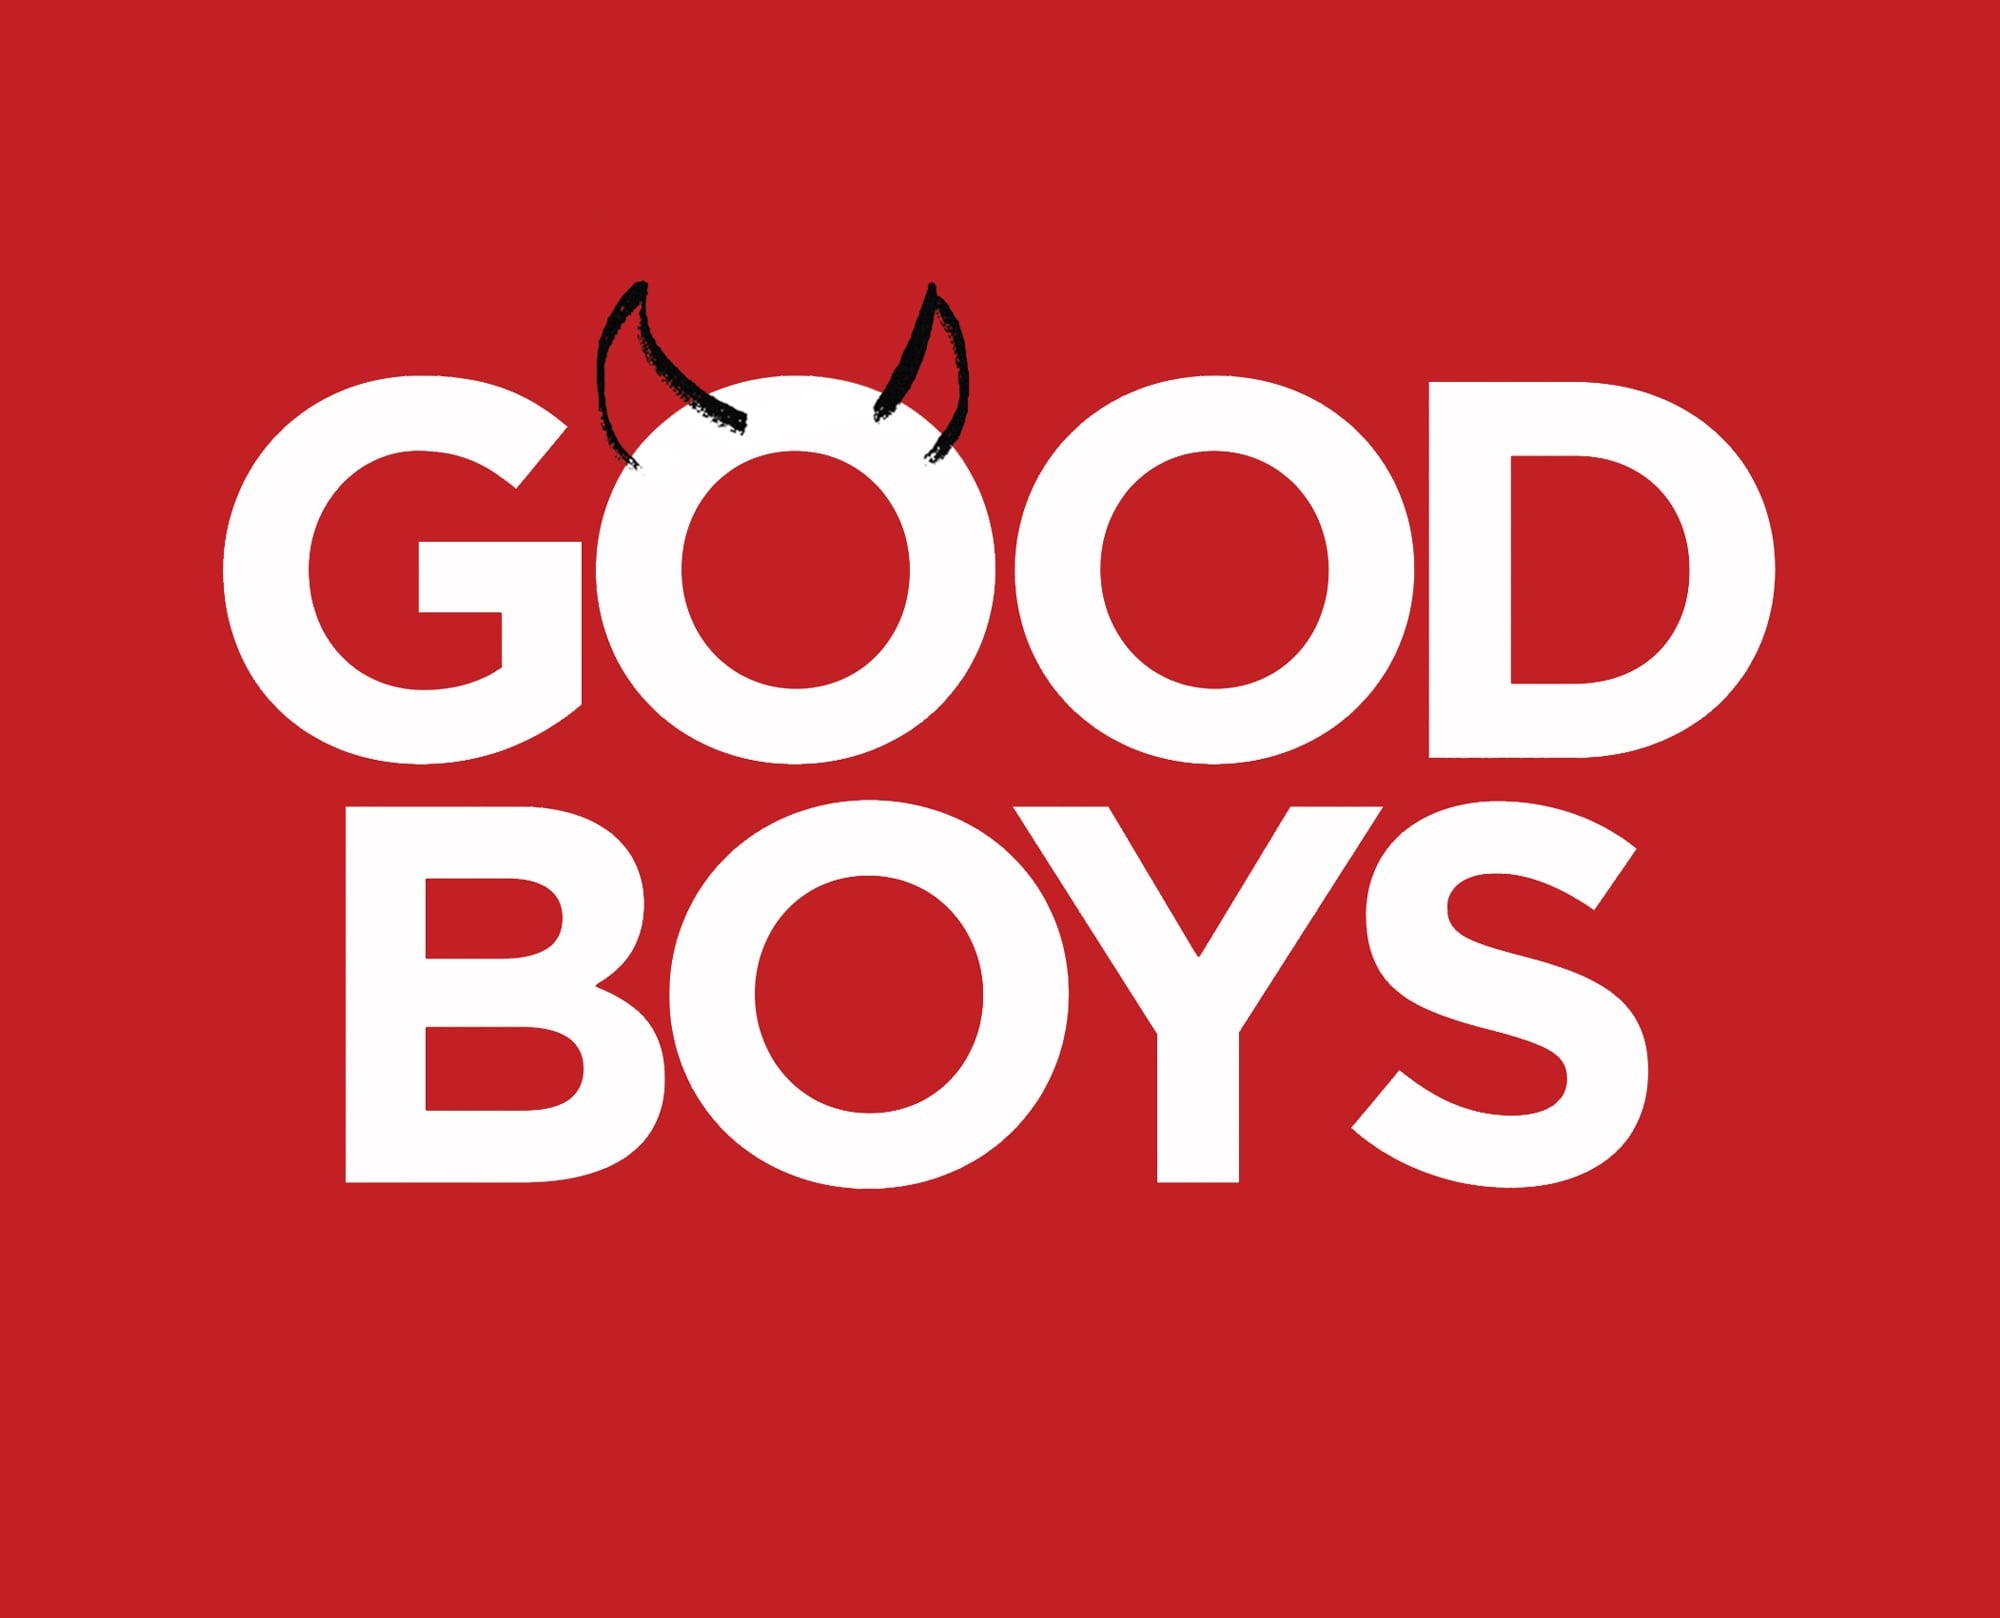 Фф good boys go. Картинка good boy. Good buy. Good boy лого. Постер good boy.